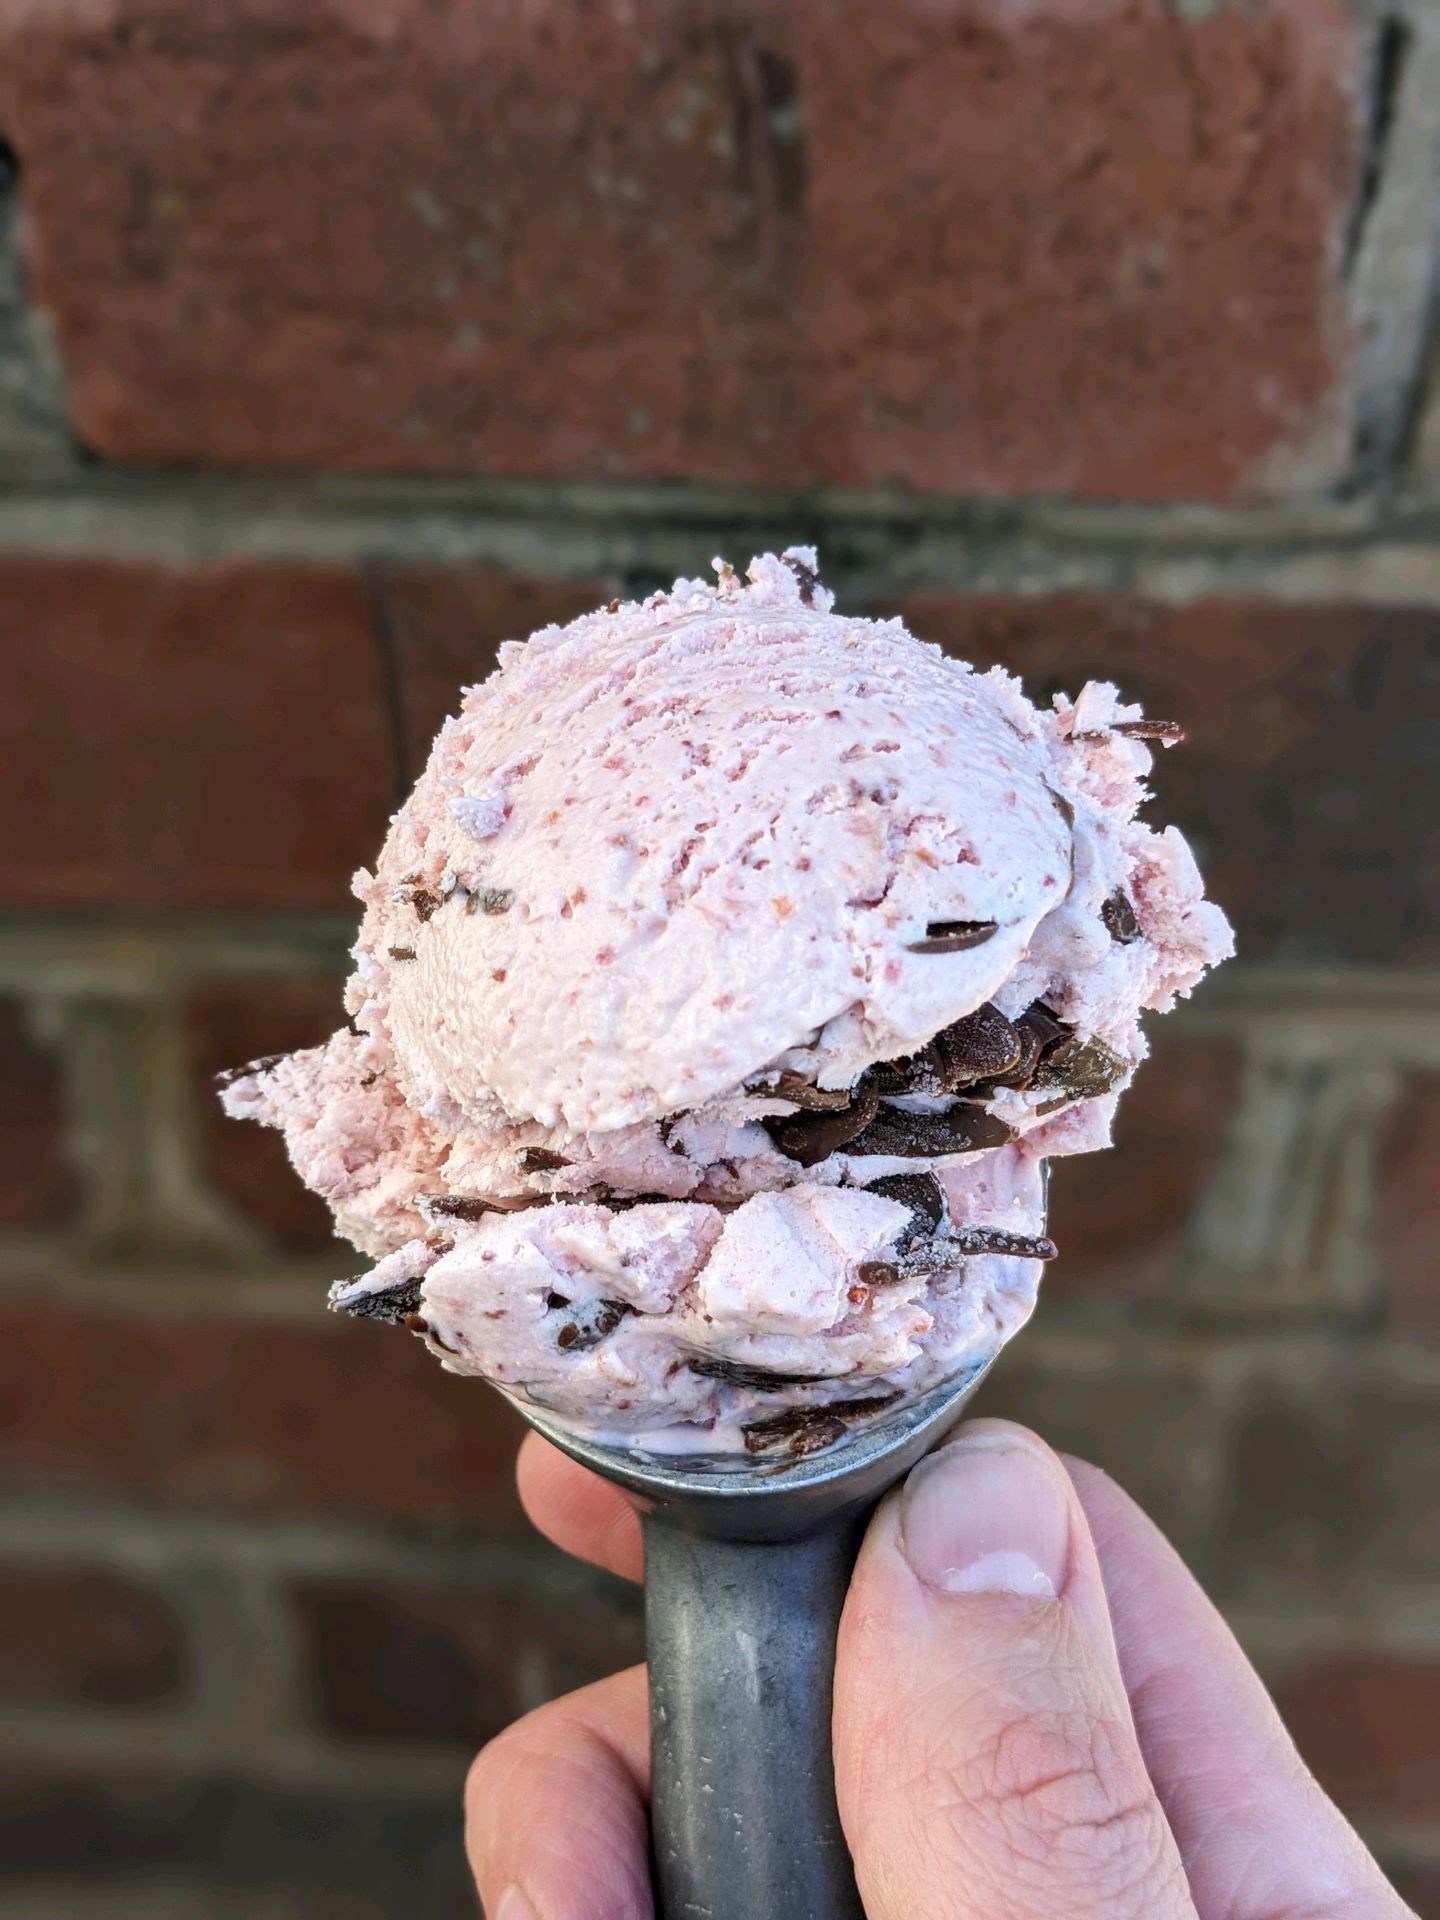 scoop of chocolate covered strawberry ice cream.